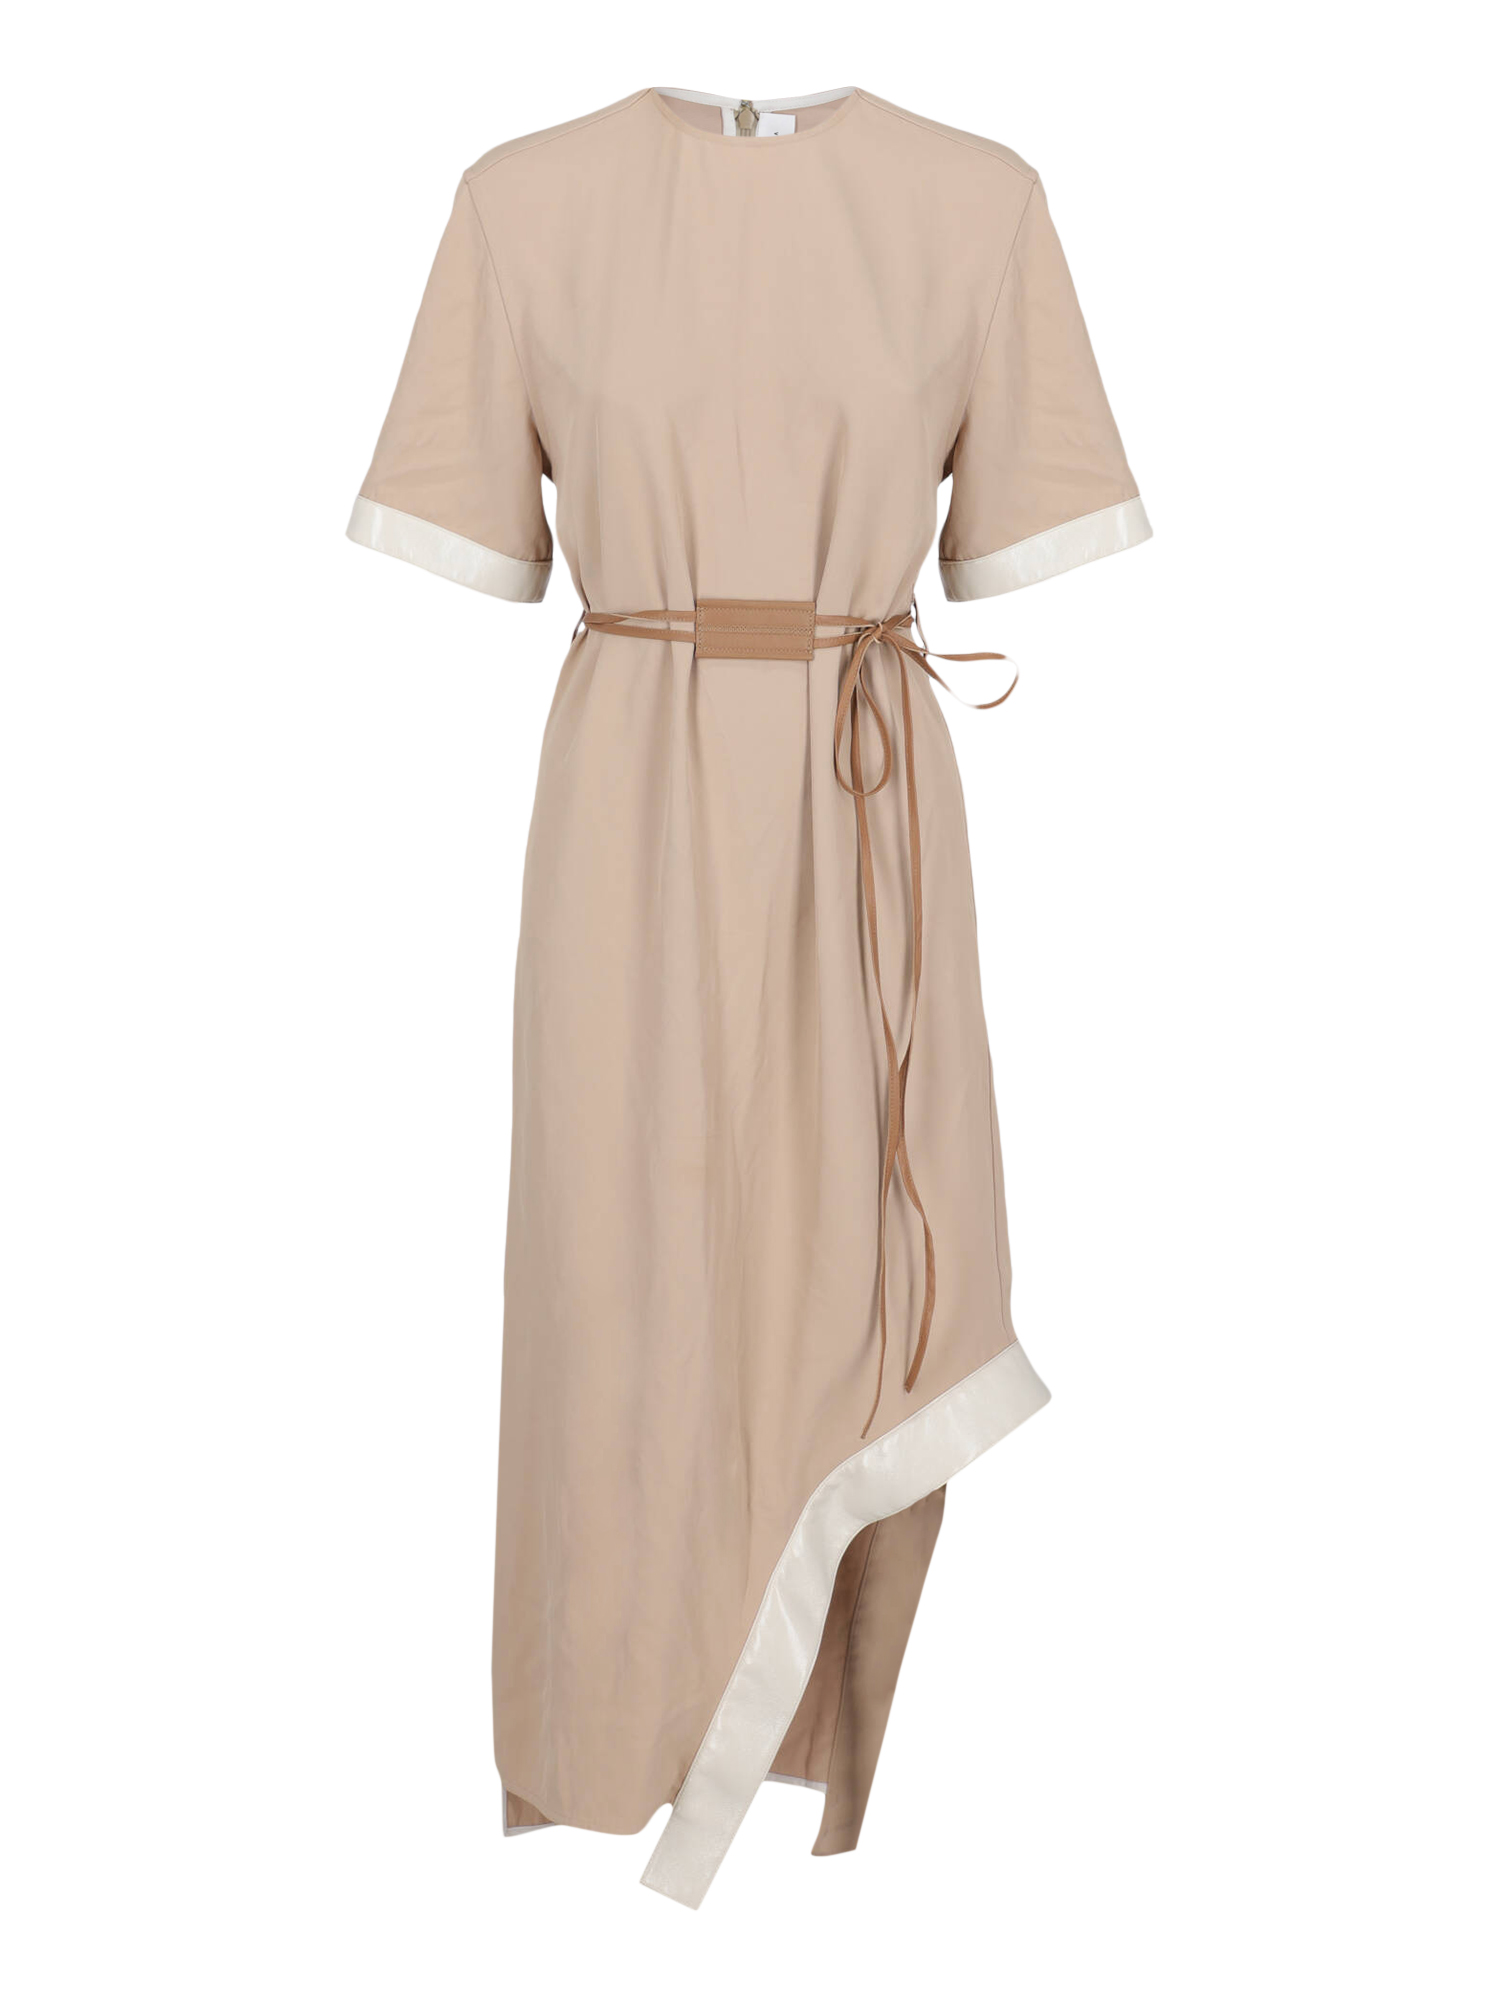 Robes Pour Femme - Victoria Beckham - En Synthetic Fibers Beige - Taille:  -